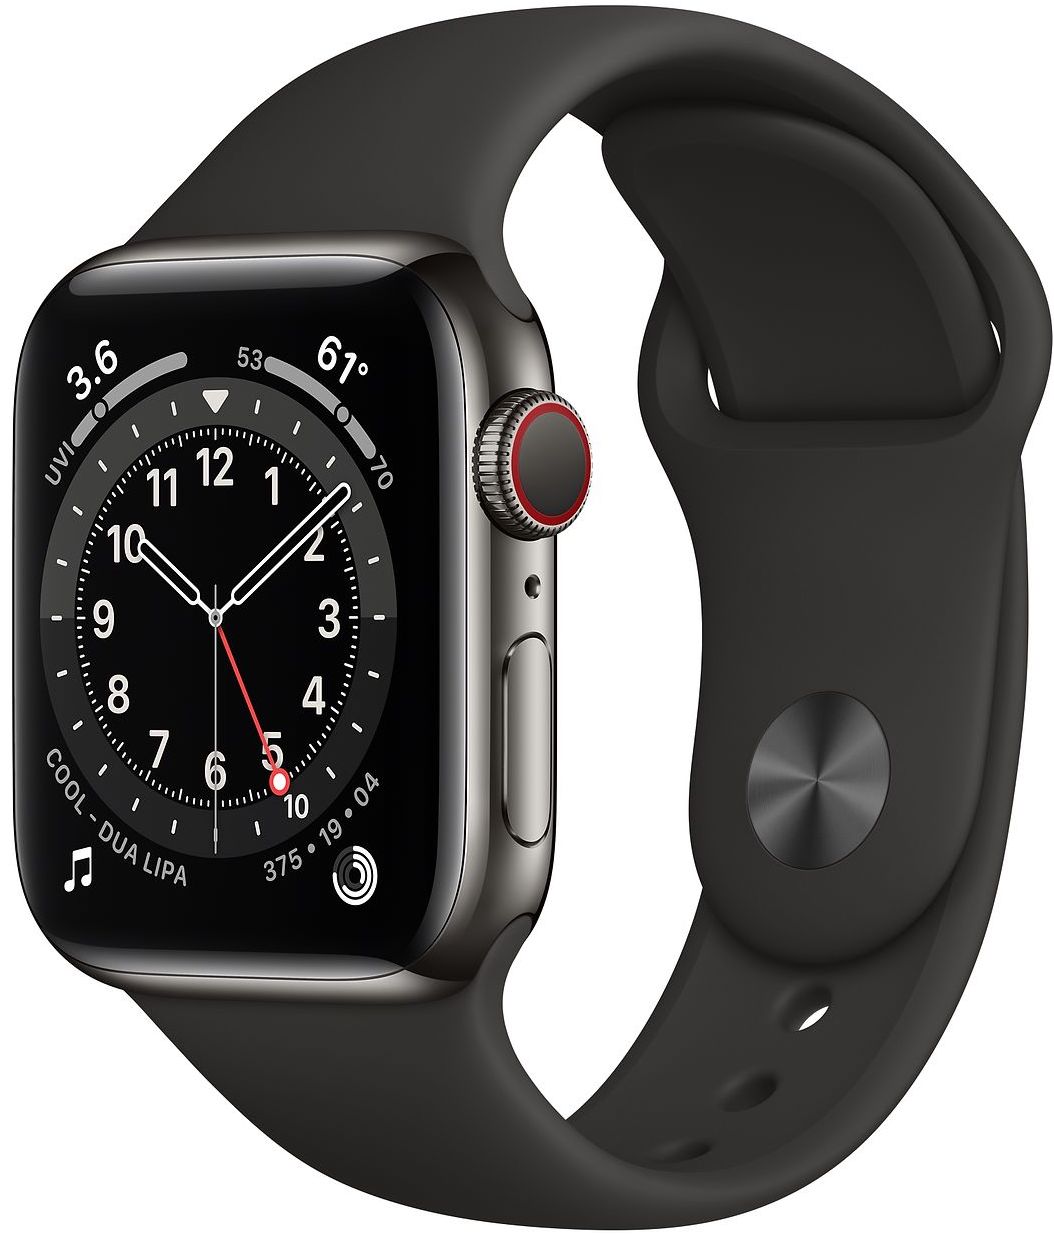 Apple Watch Series 6 Graphite Stainless Steel